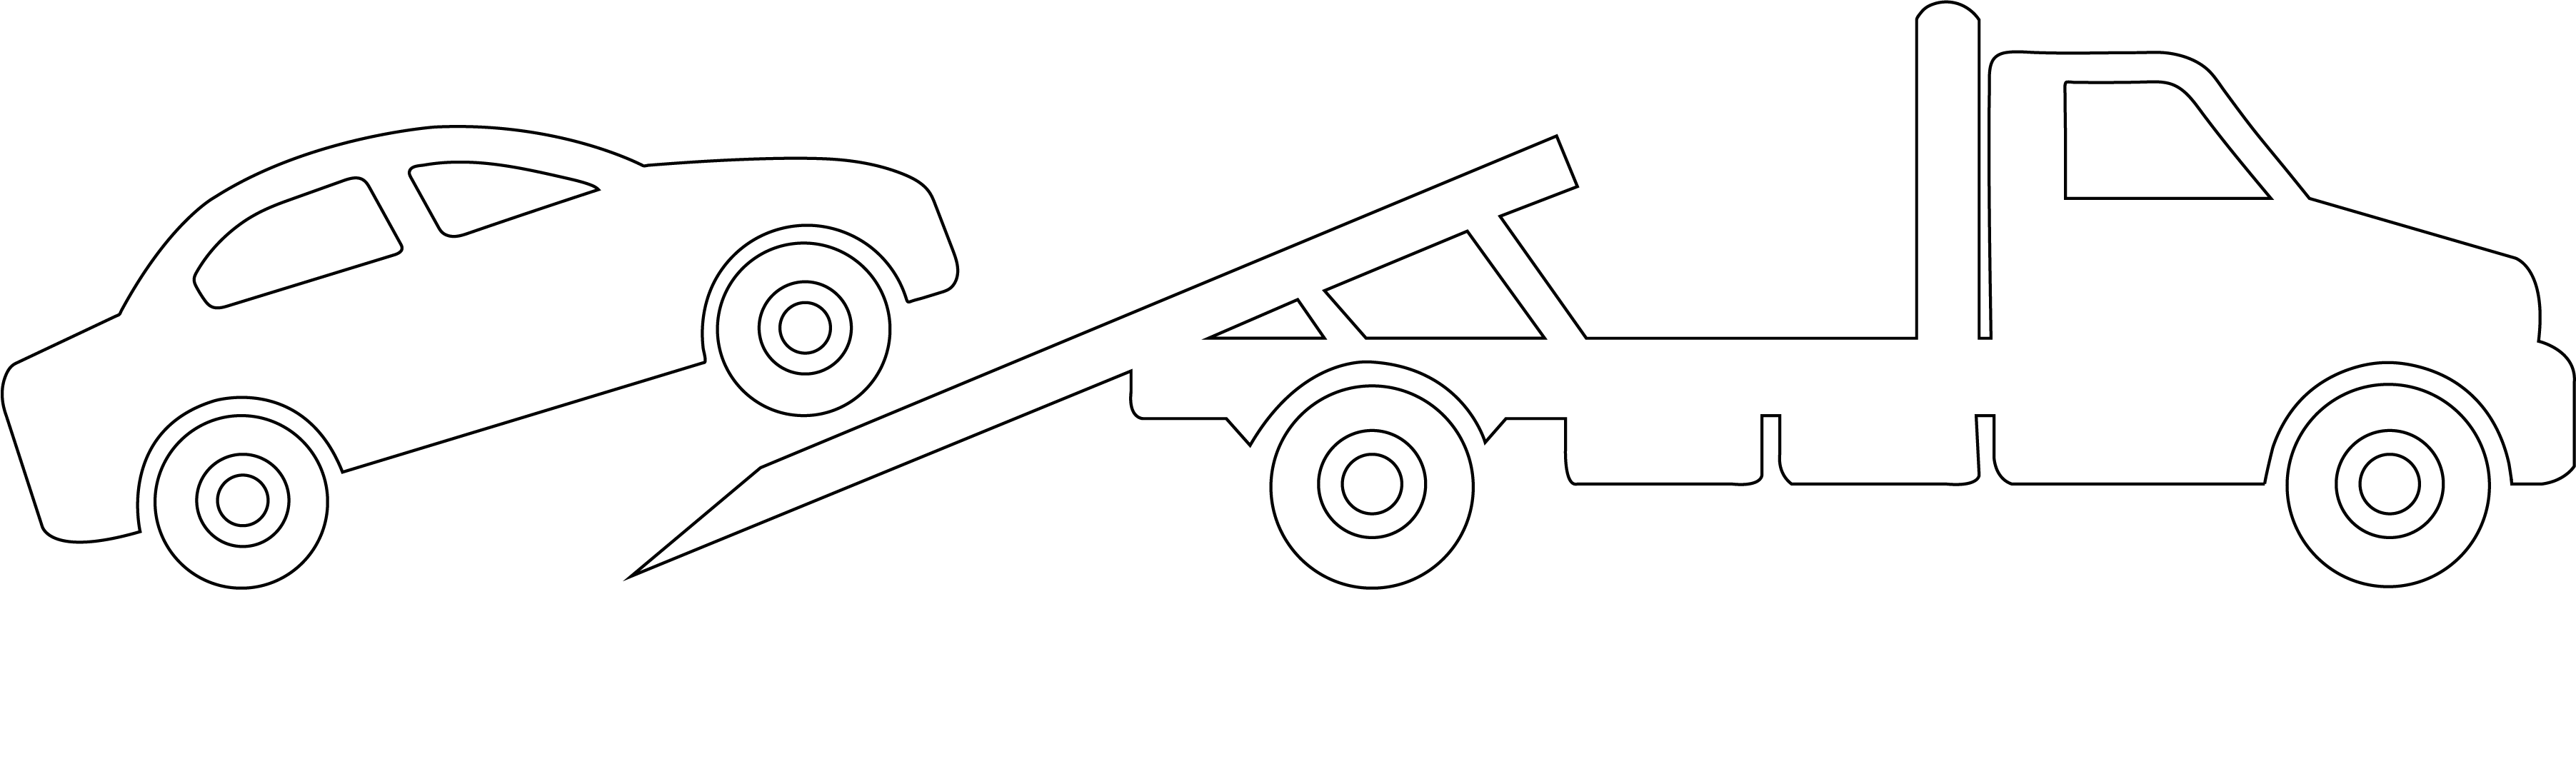 Tractari Auto Craiova Logo